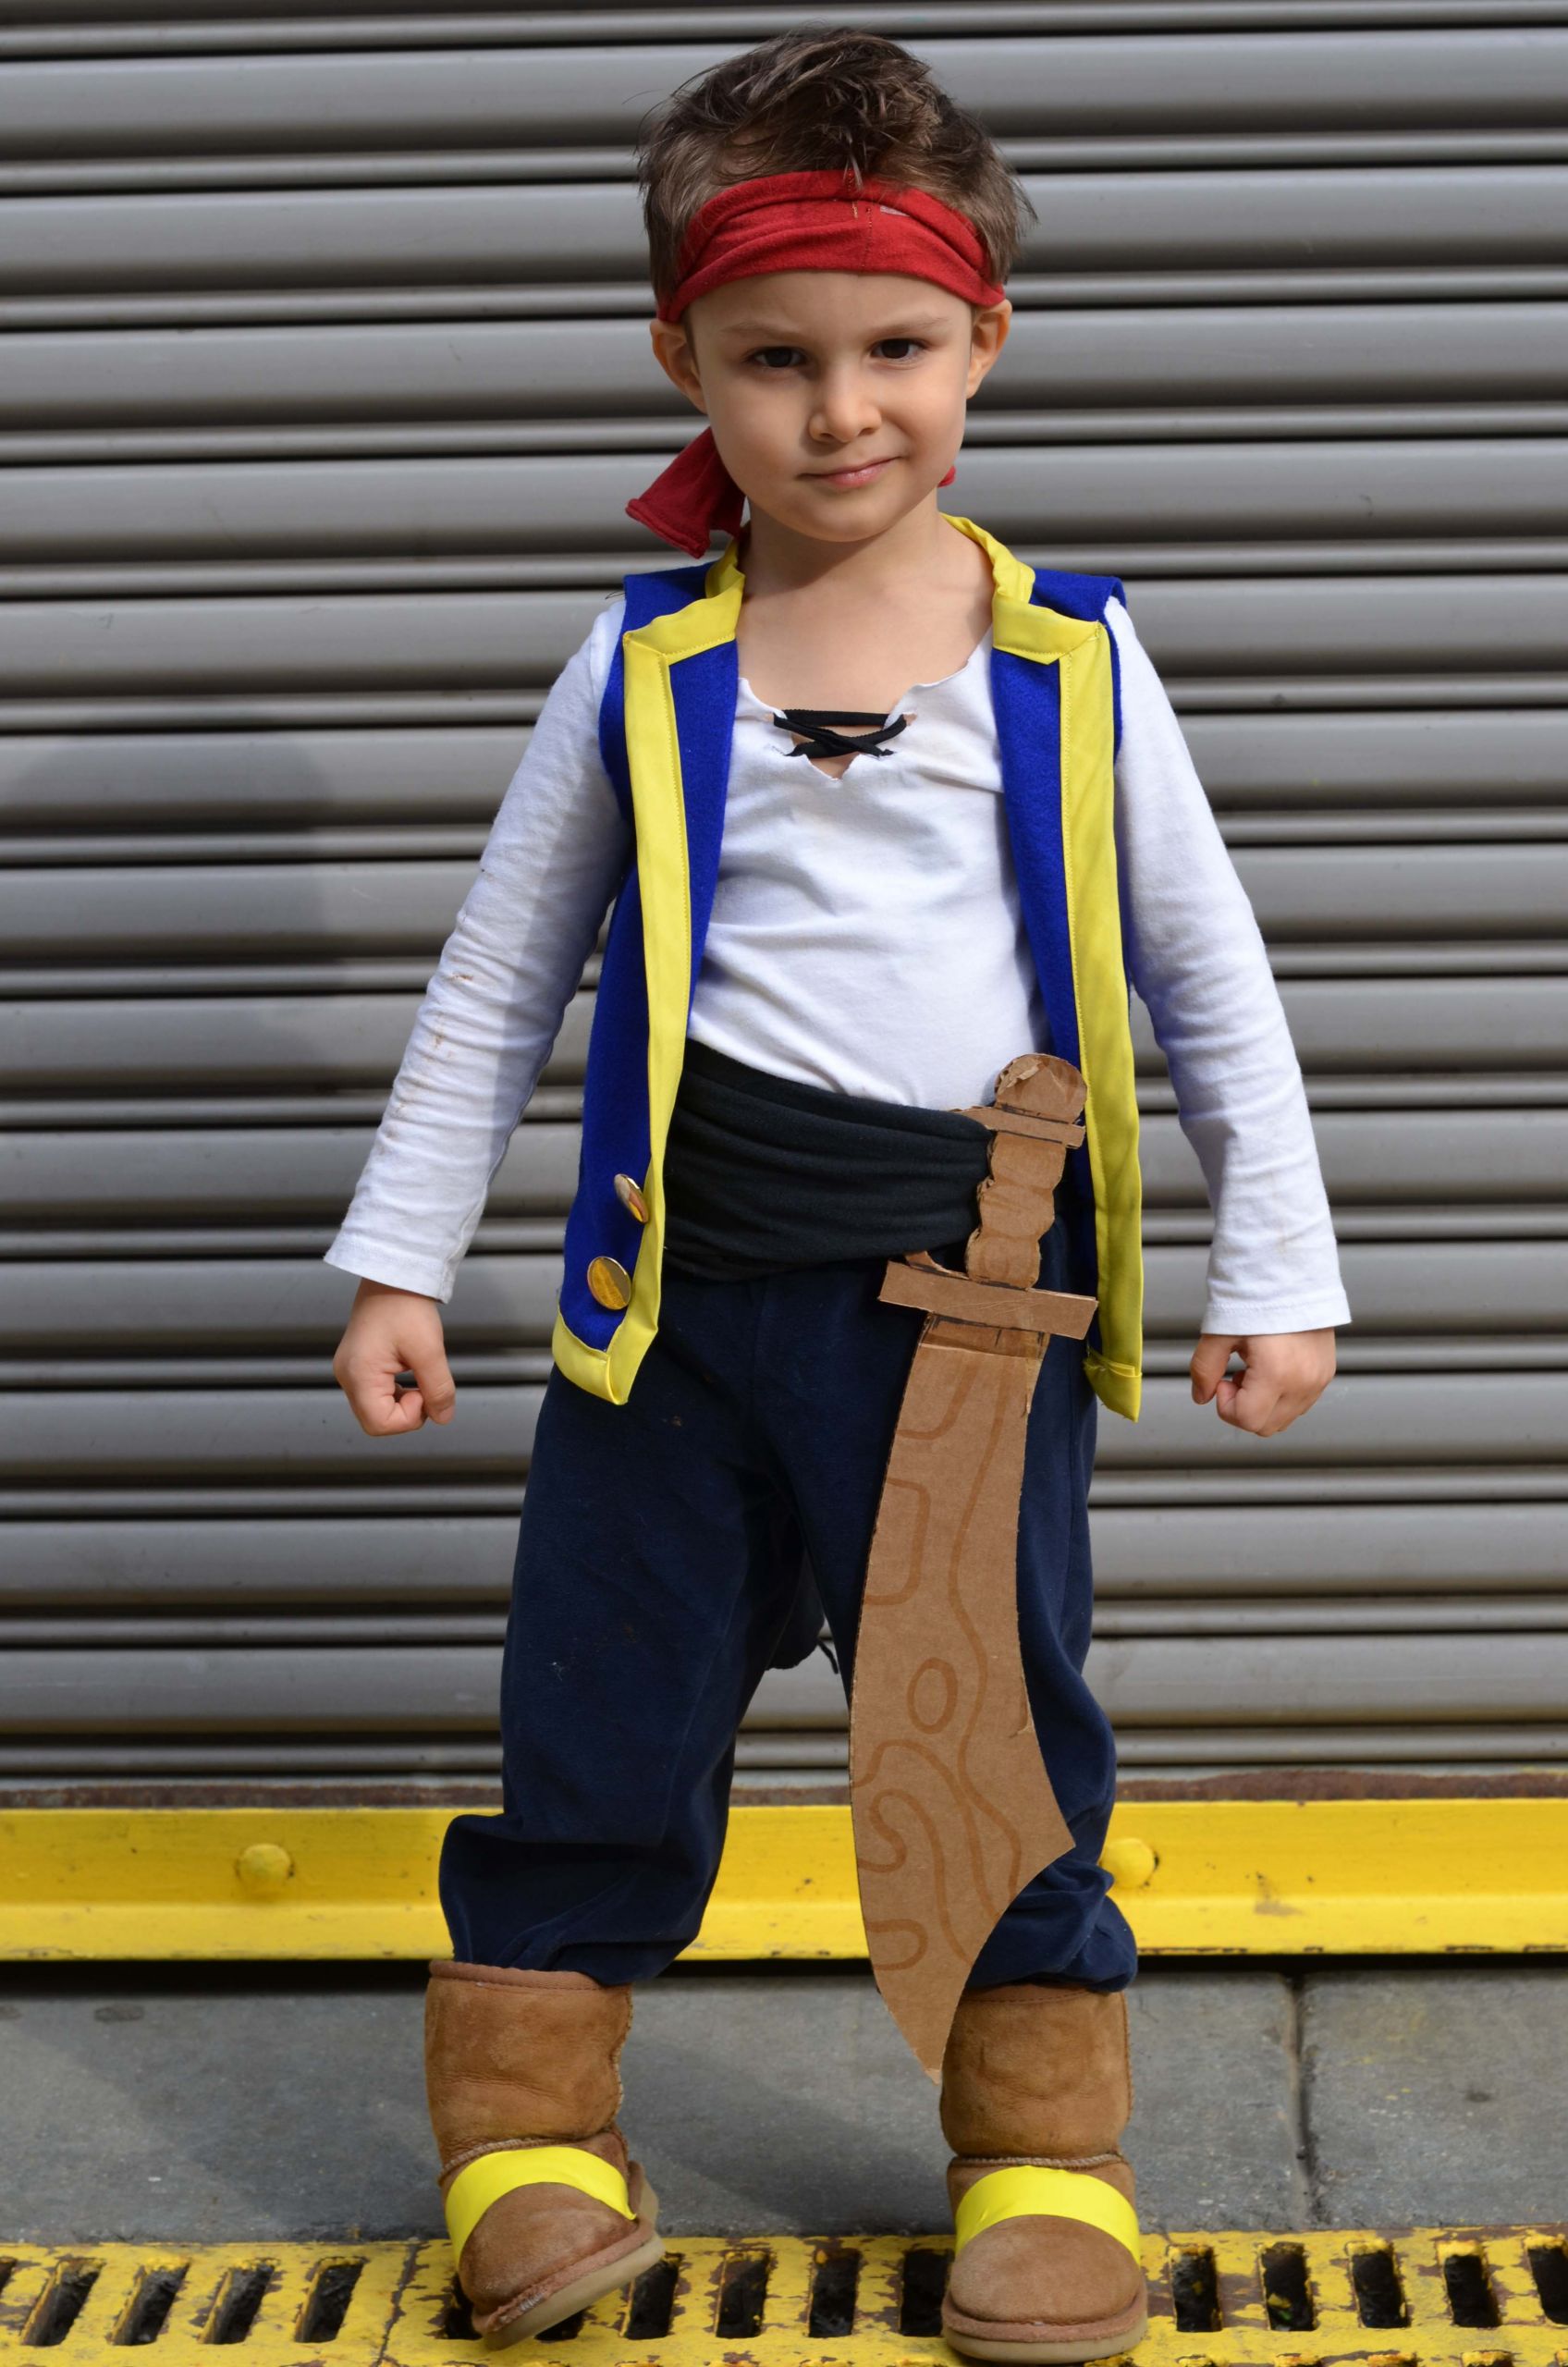 DIY Kid Pirate Costume
 DIY Halloween Costumes for Kids